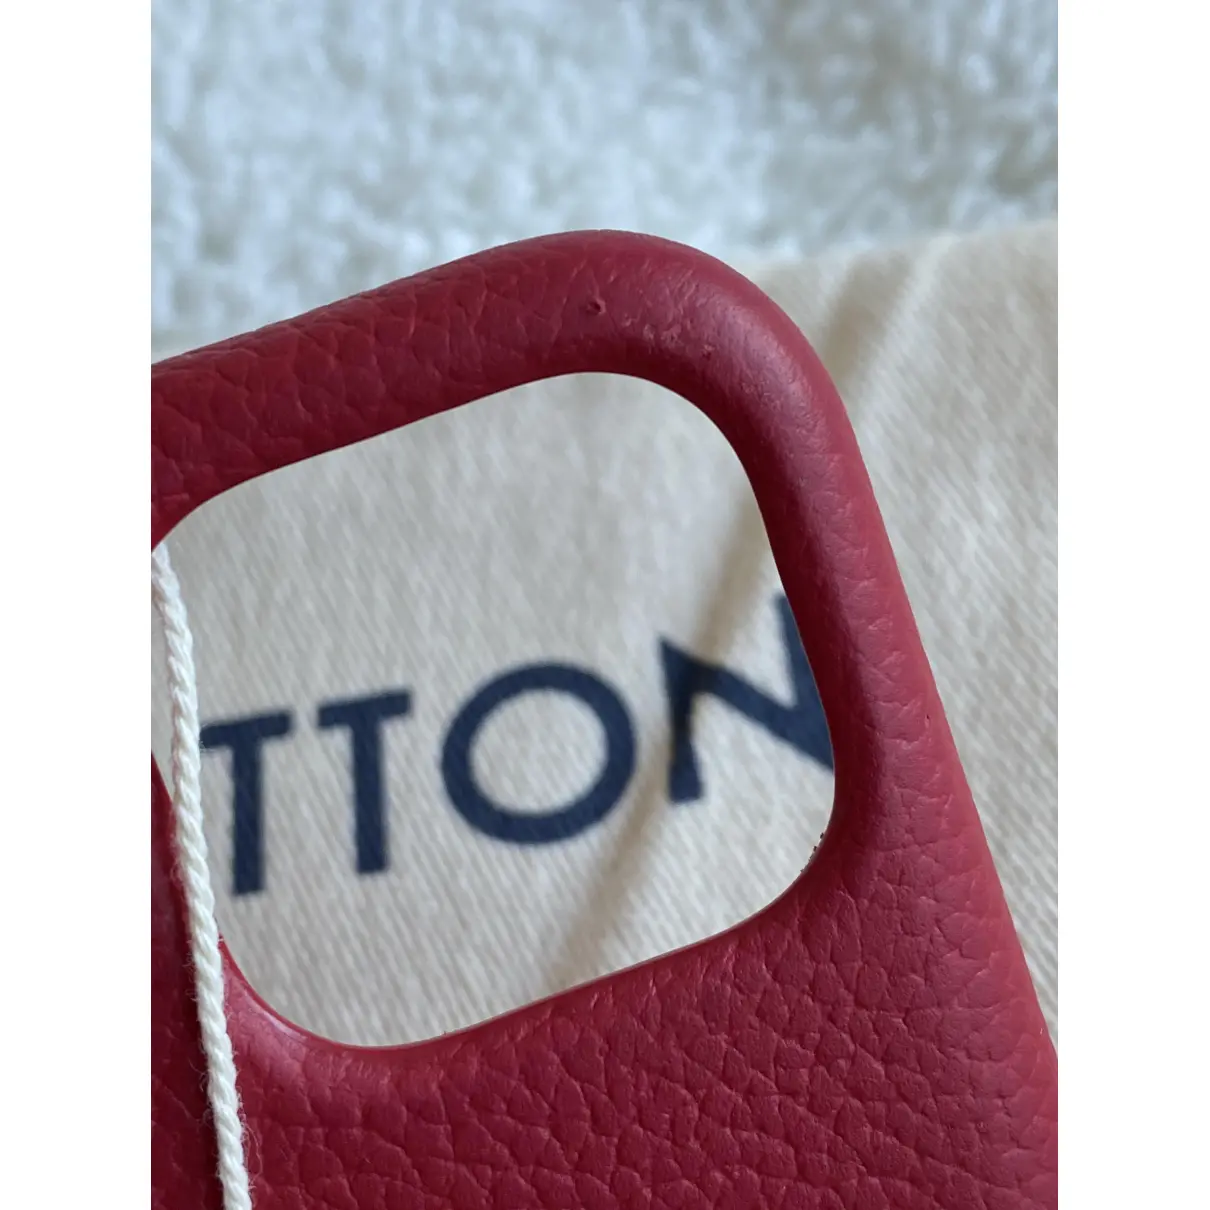 Leather iphone case Louis Vuitton